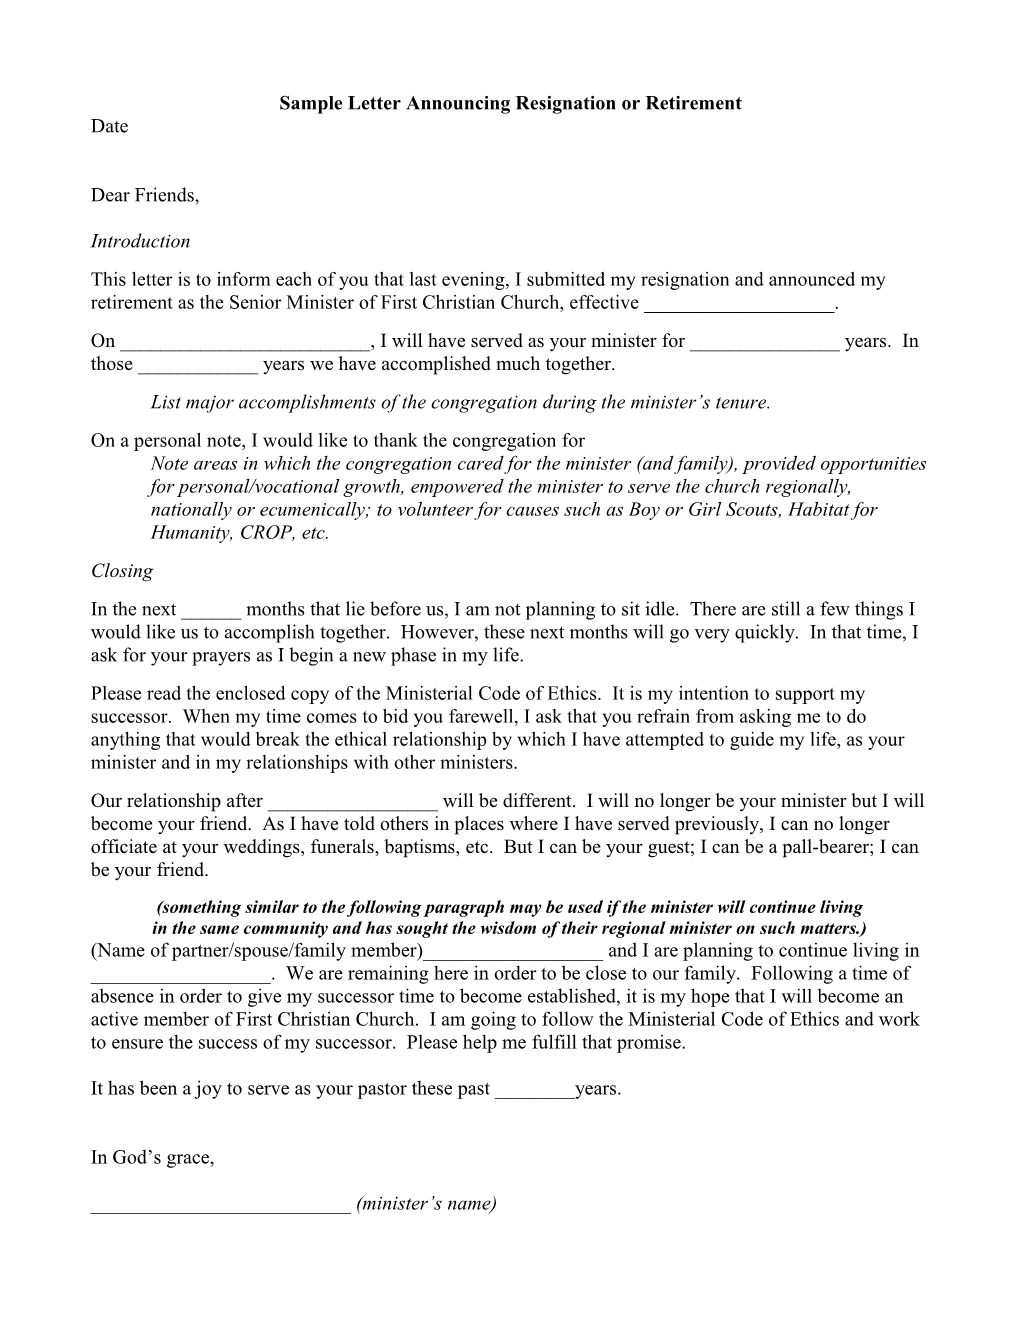 Sample Letter Announcing Resignation Or Retirement